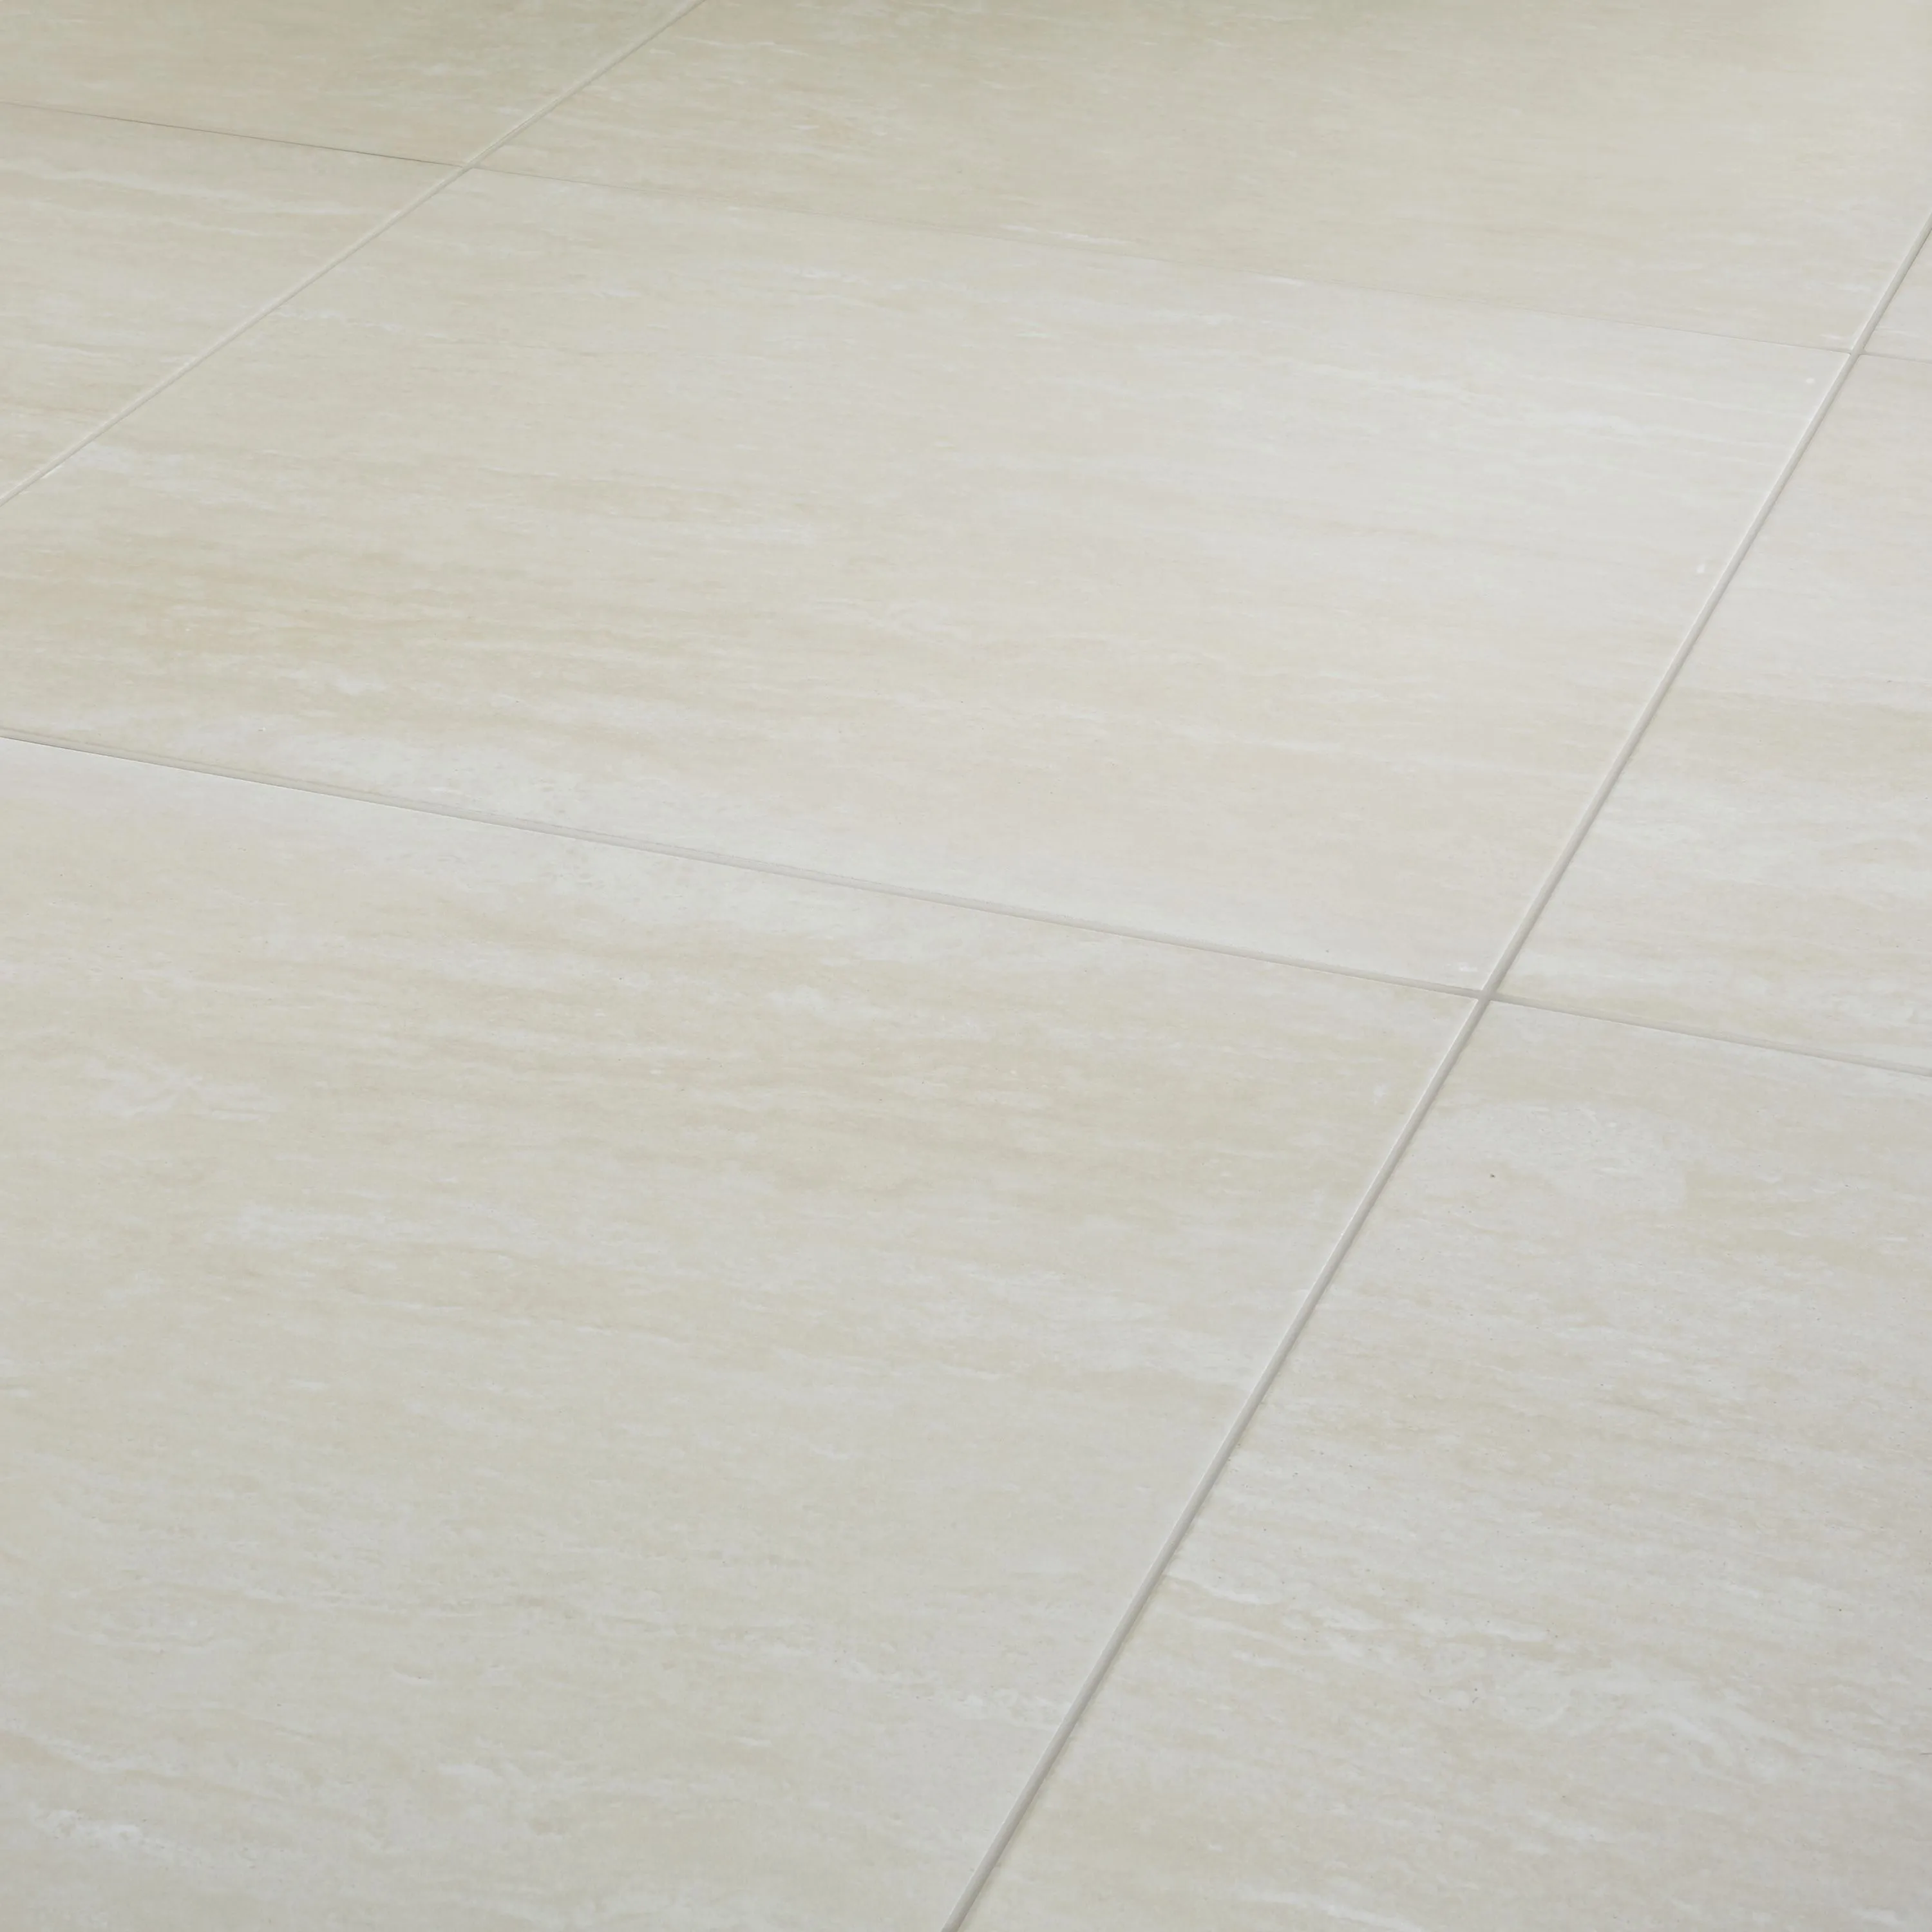 Soft travertin Beige Matt Stone effect Patterned Travertine Indoor Wall & floor Tile, Pack of 3, (L)600mm (W)600mm